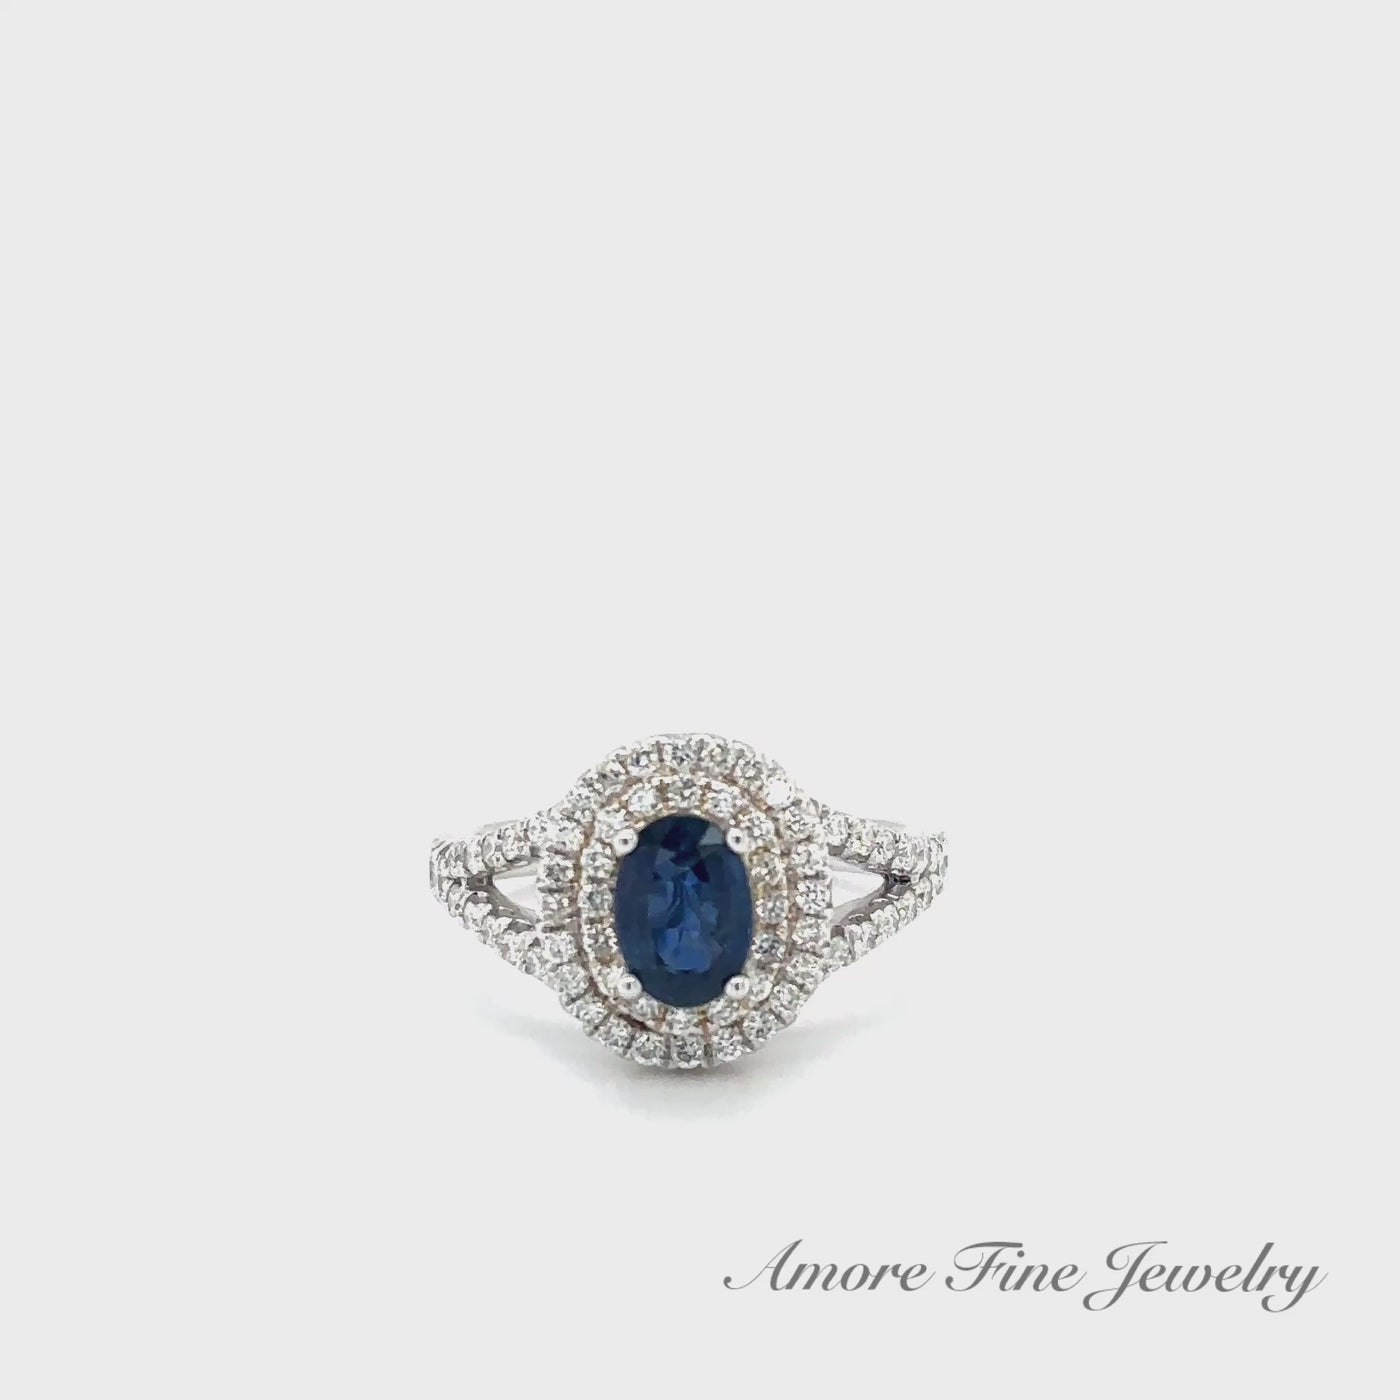 Double Halo Sapphire Diamond Ring